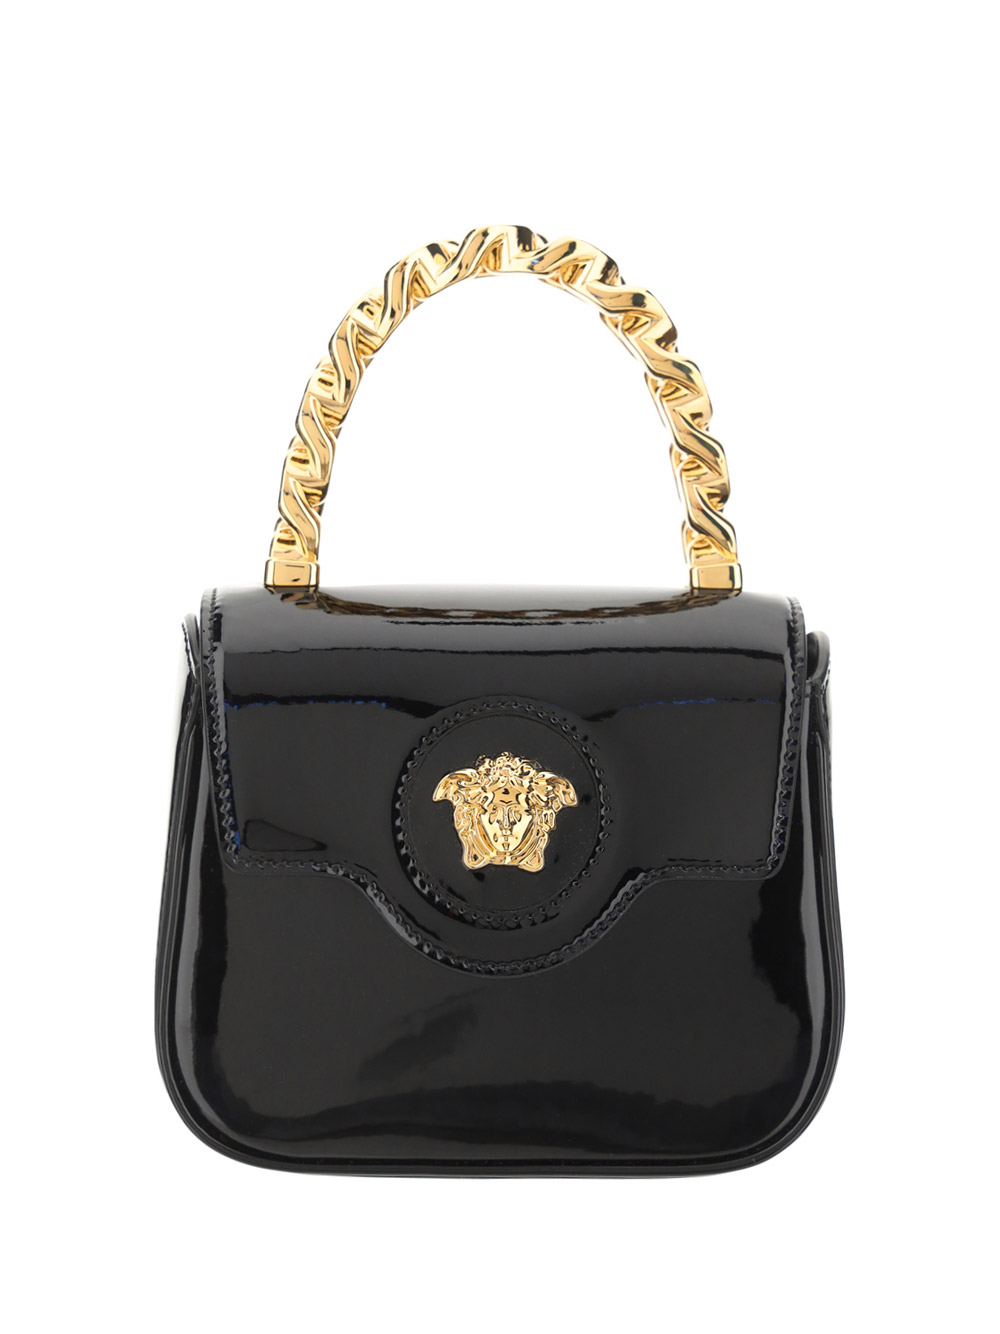 VERSACE Handbag NWT Brown Patent Leather w/ Gold Hardware (Bag